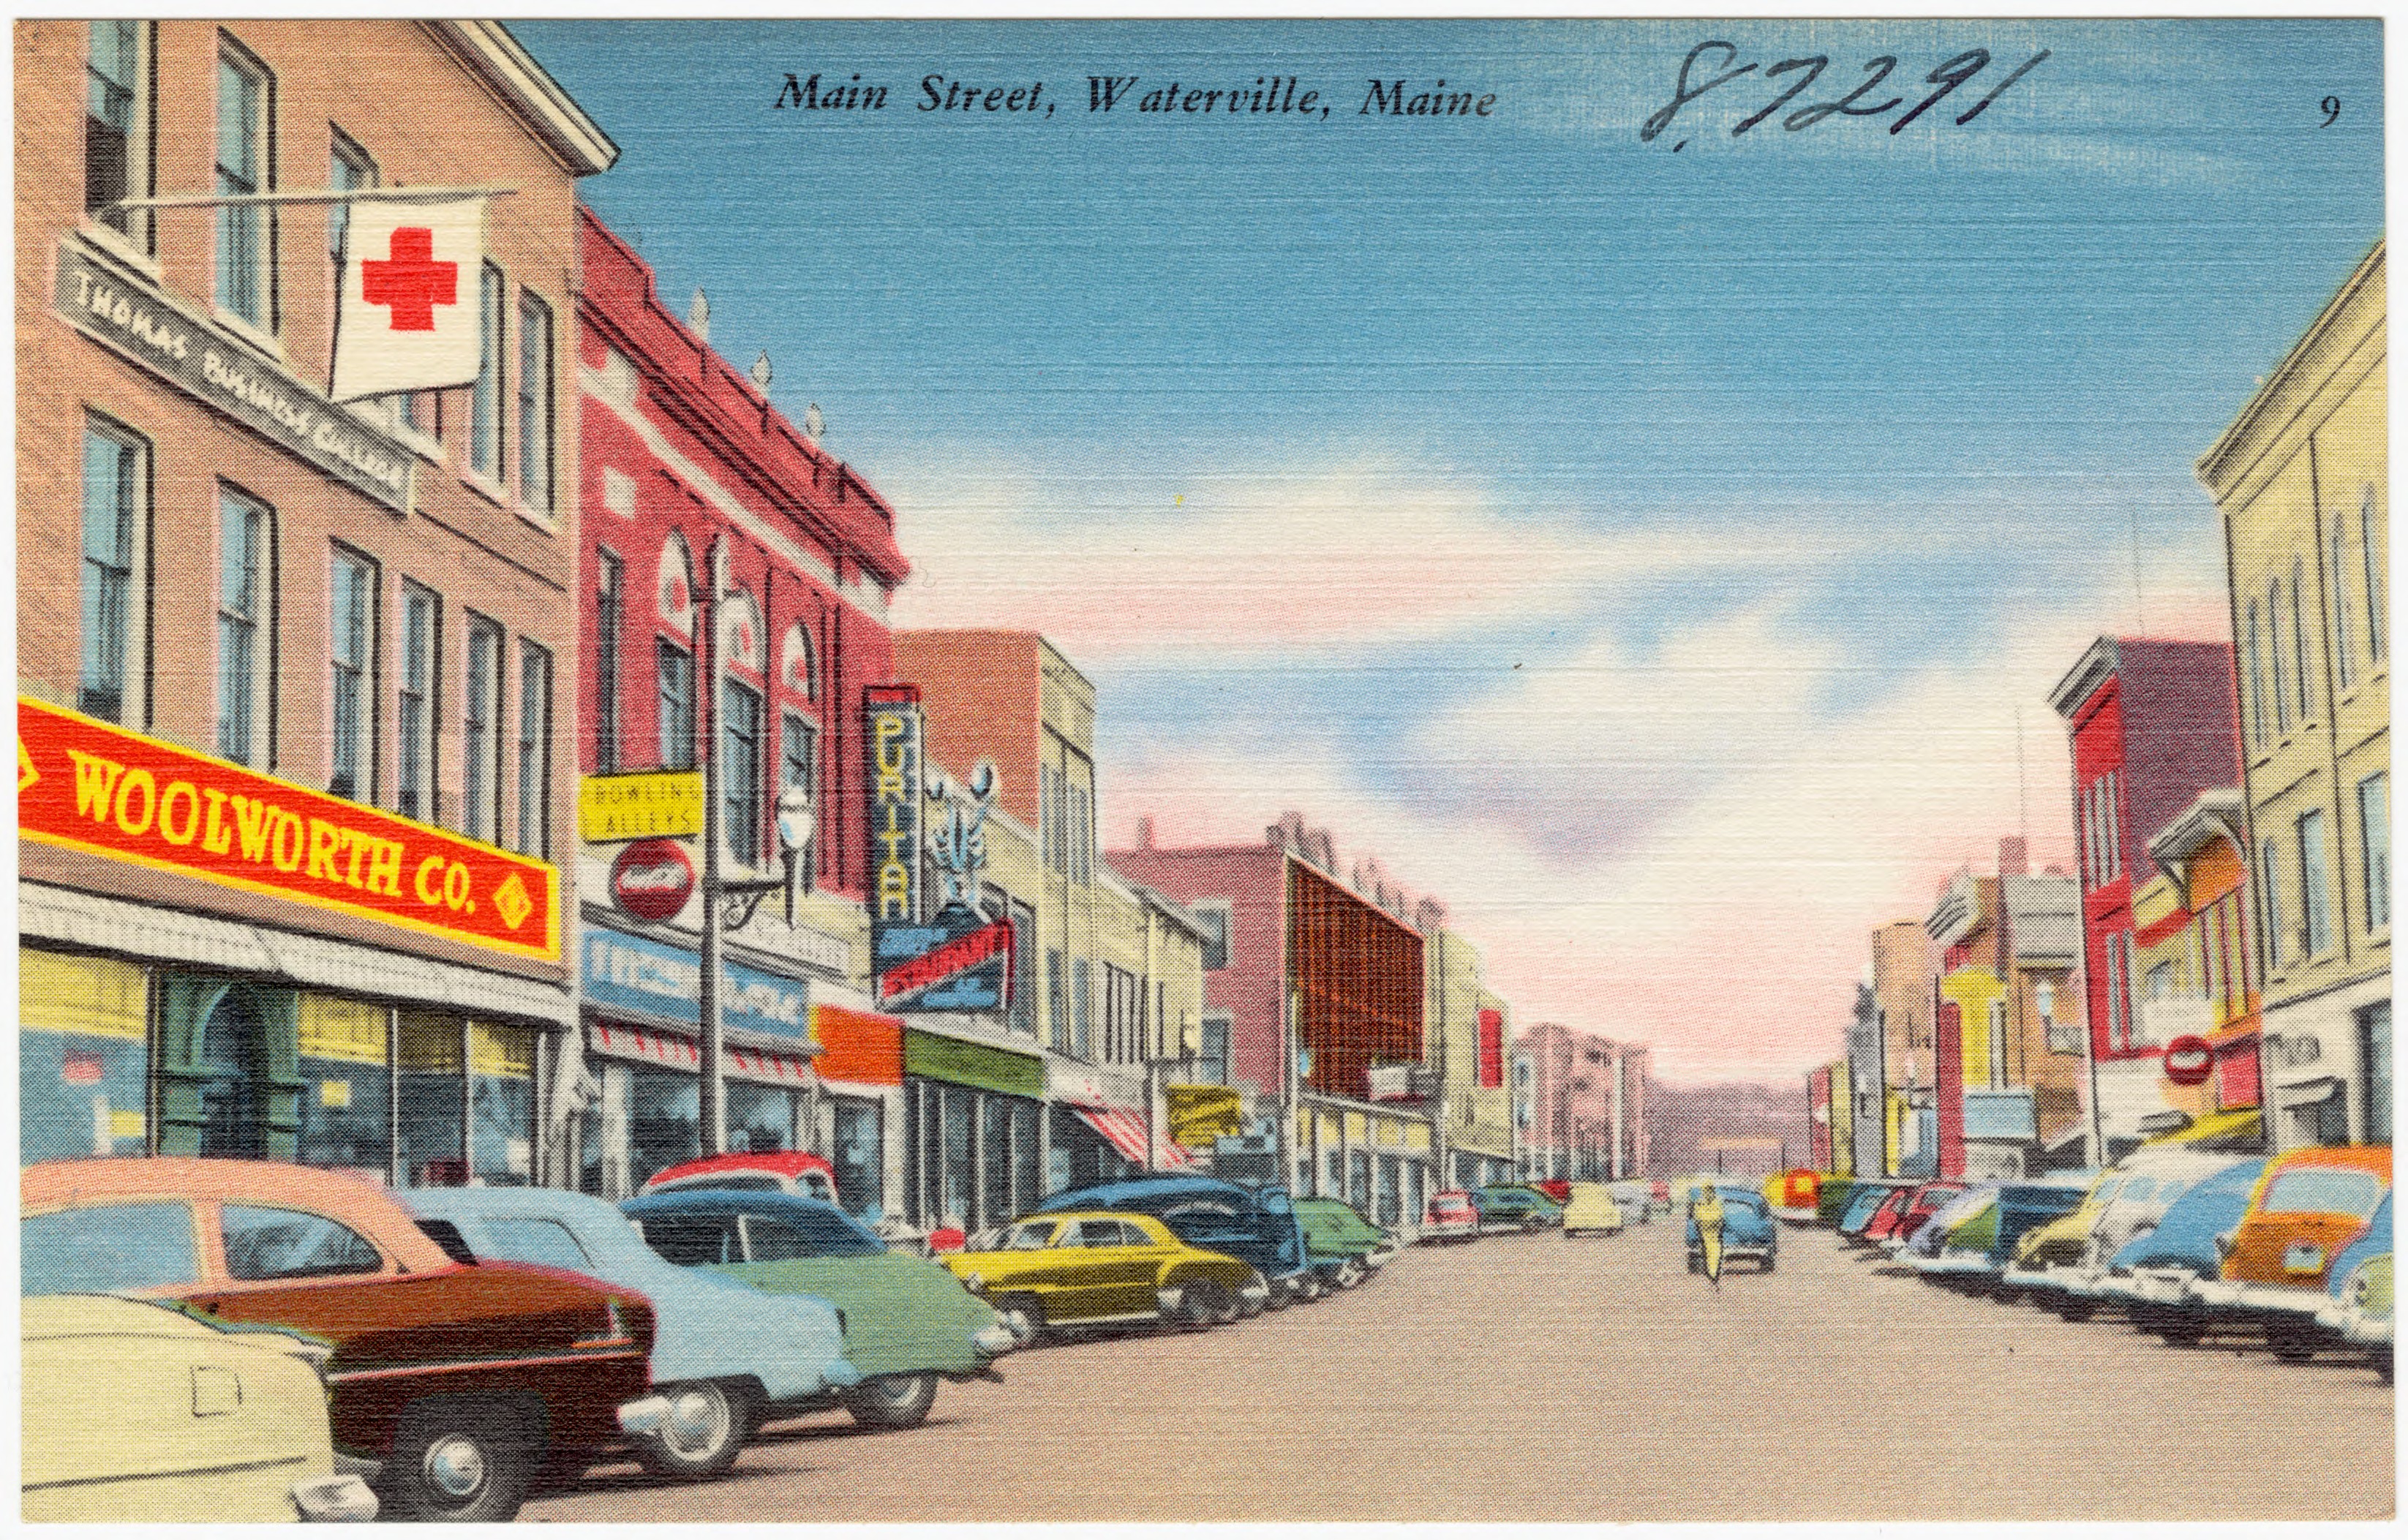 File:Main Street, Waterville, Maine (87291).jpg - Wikimedia Commons